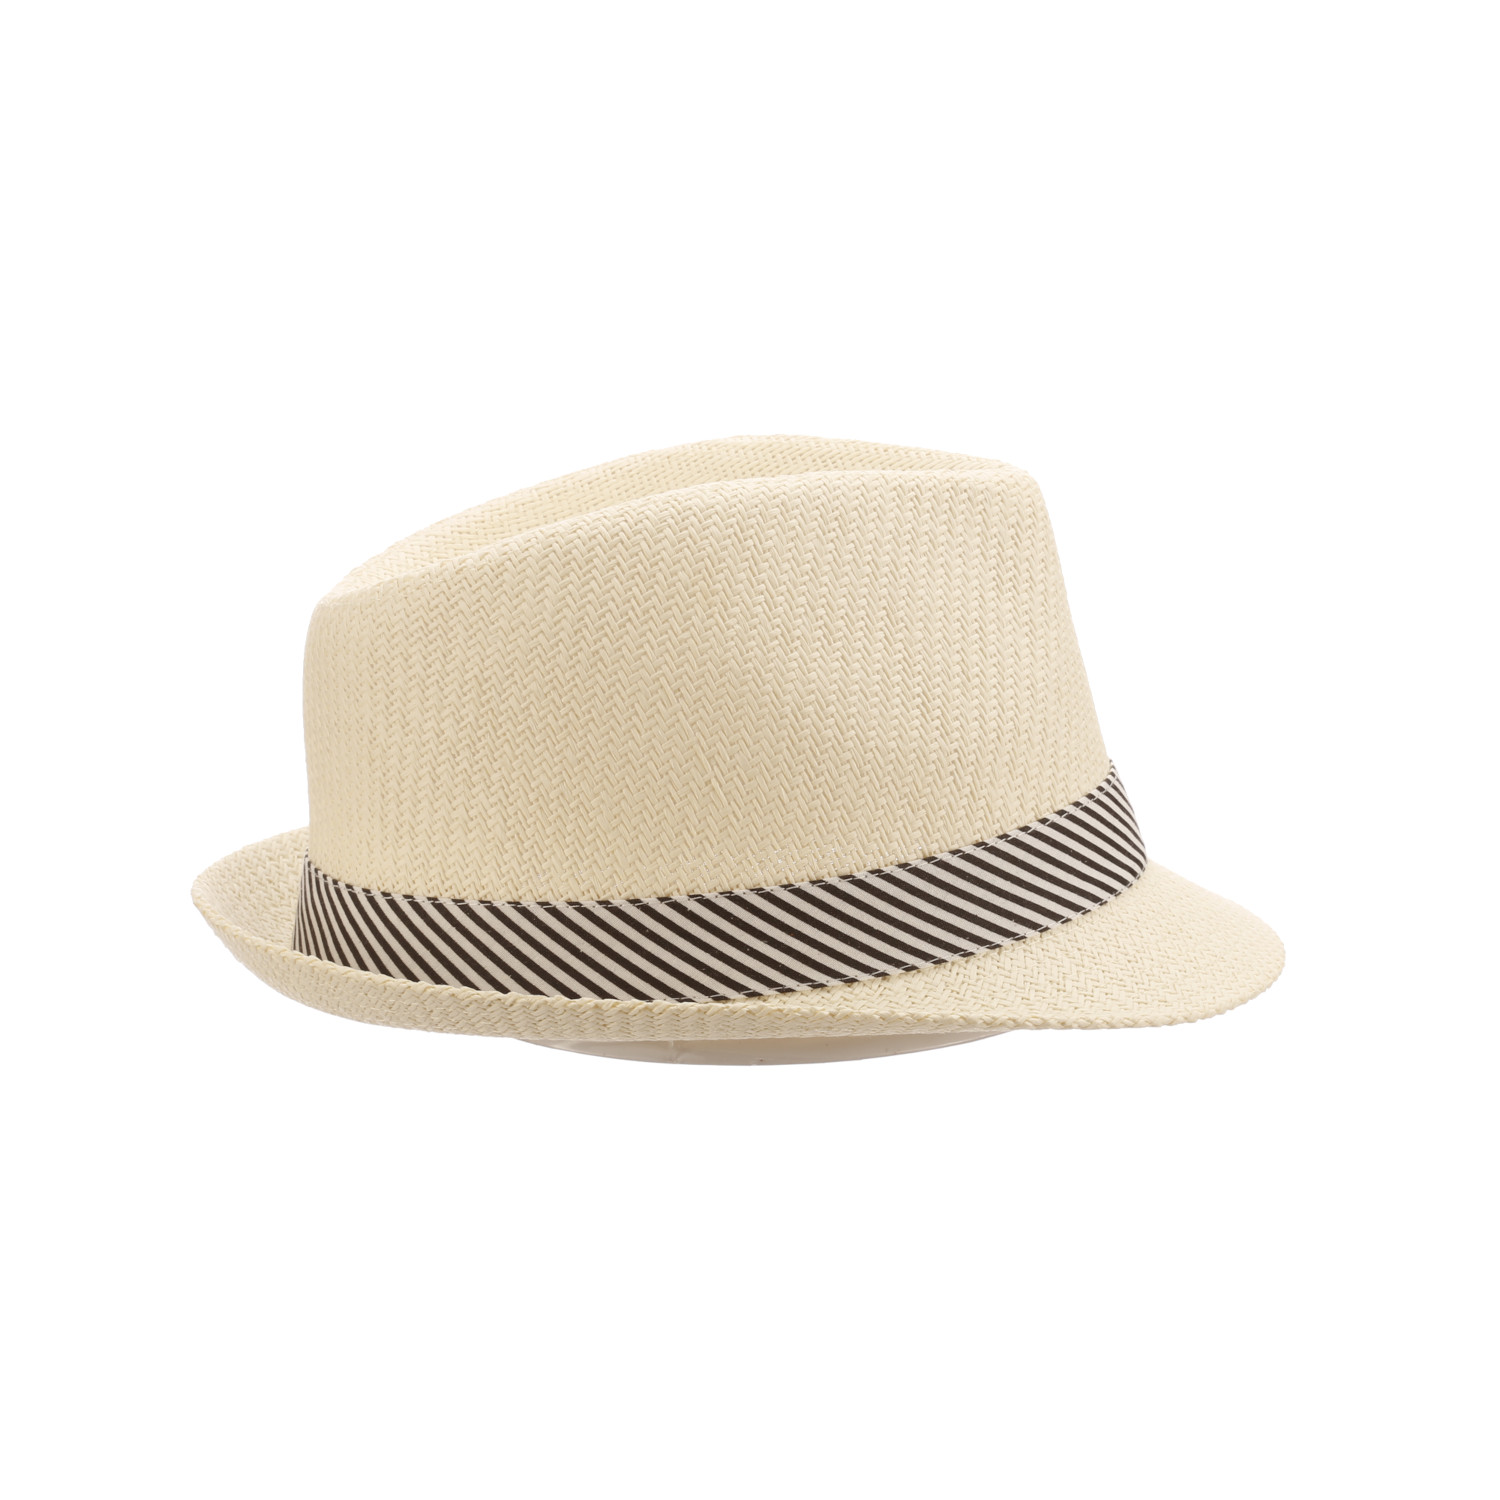 Panama Jack Women's Fedora Hat - Soft Matte Toyo Straw, Striped Cotton Hat